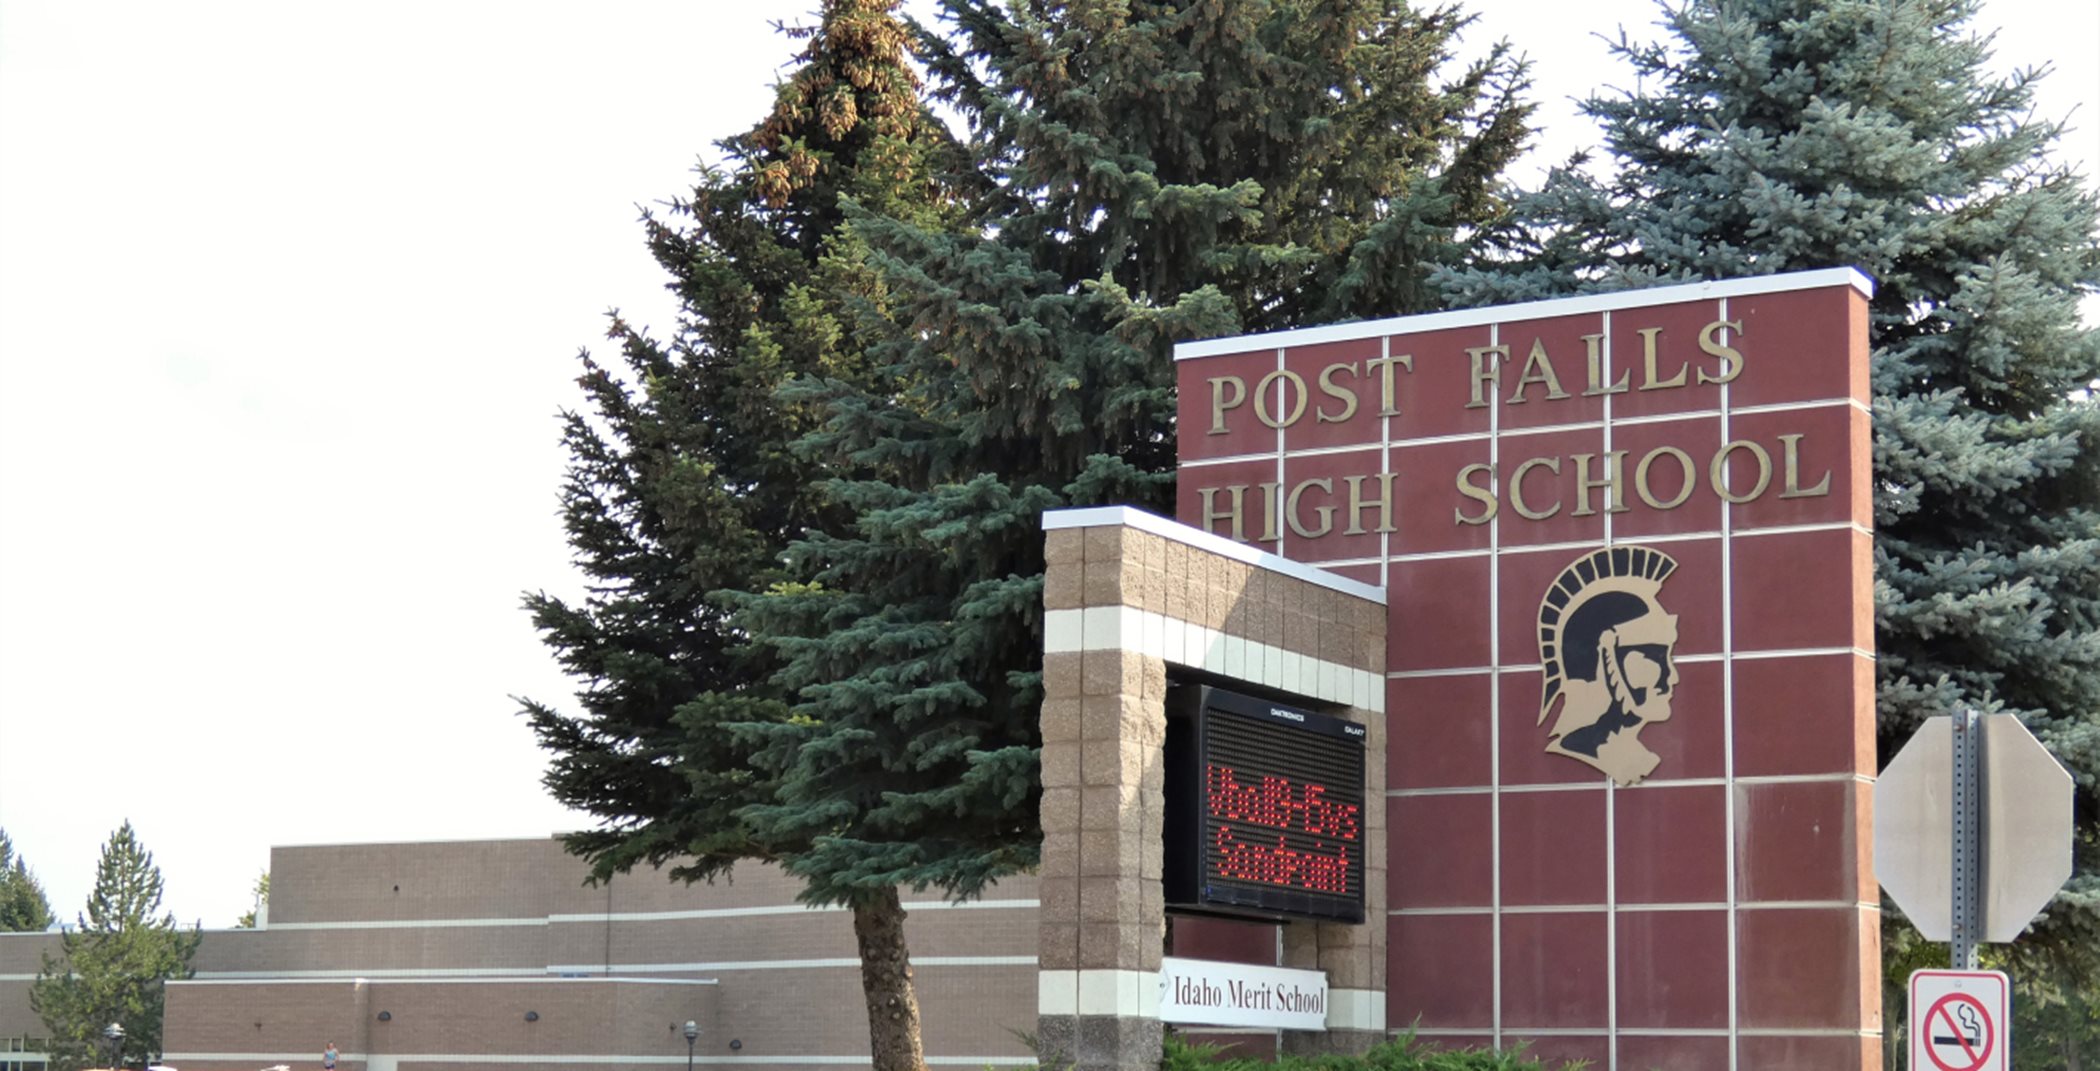 Post Falls High School sign and digital sign